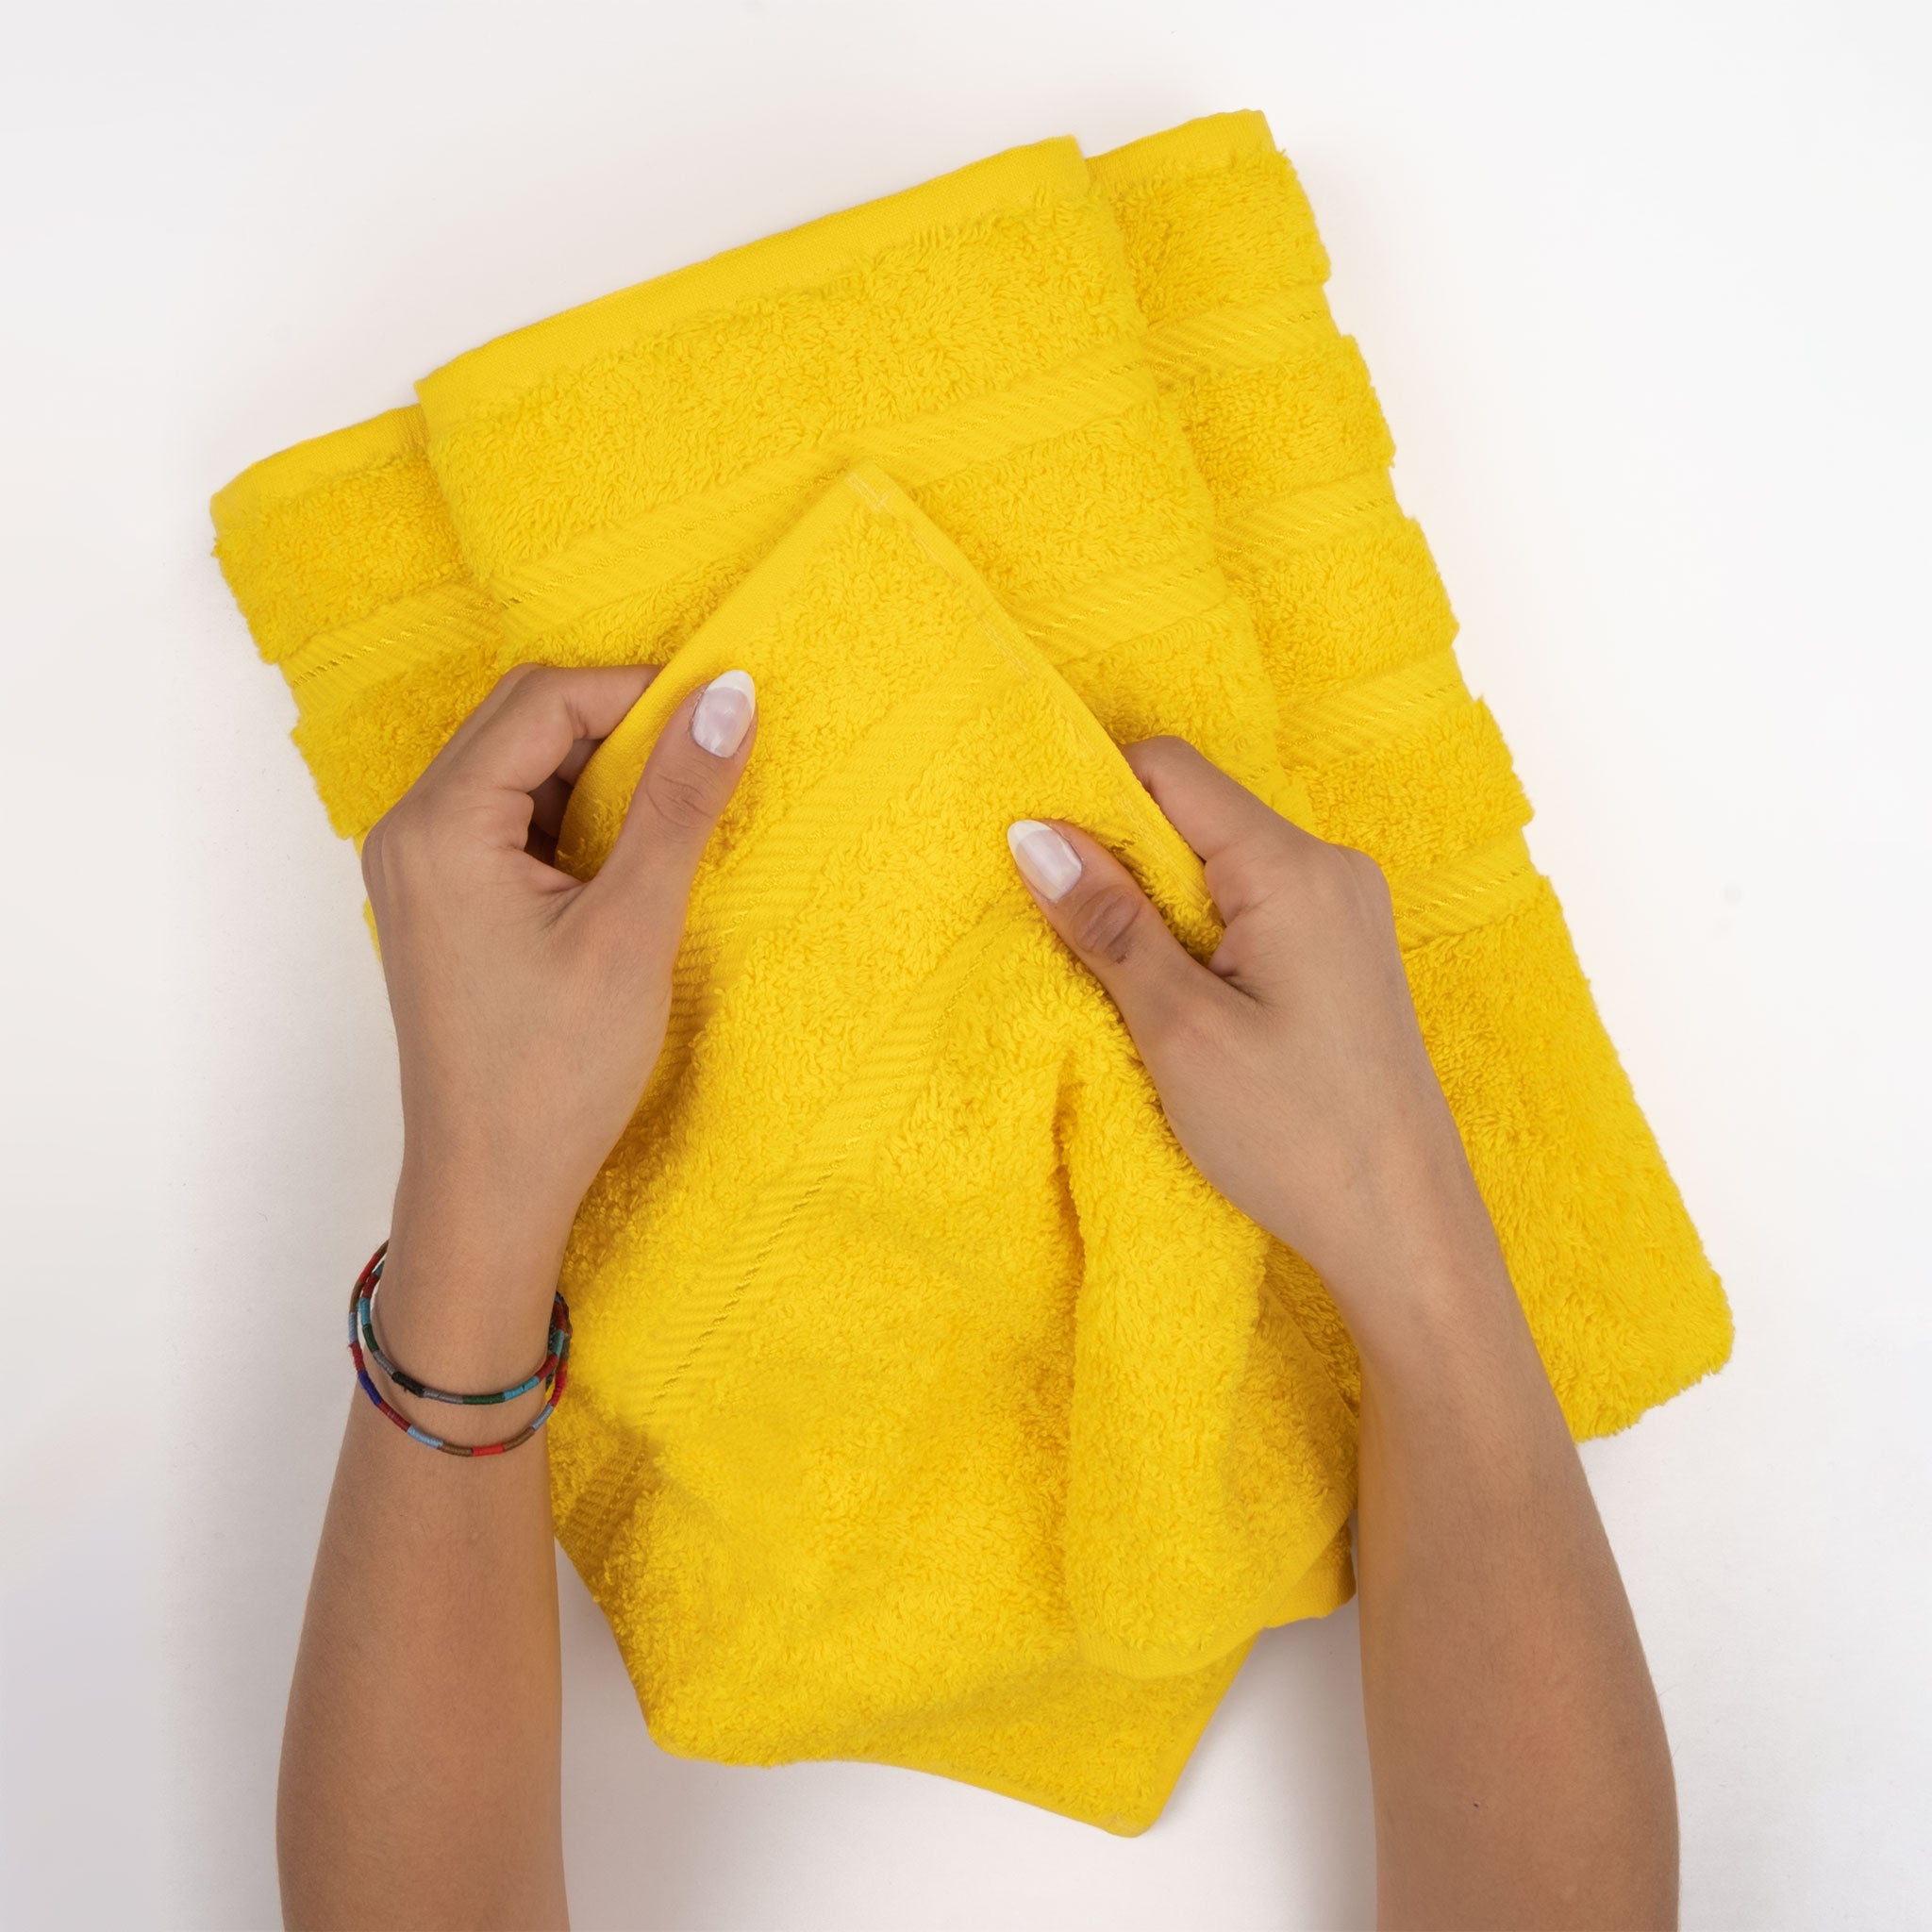 American Soft Linen - 35x70 Jumbo Bath Sheet Turkish Bath Towel - 16 Piece Case Pack - Yellow - 4